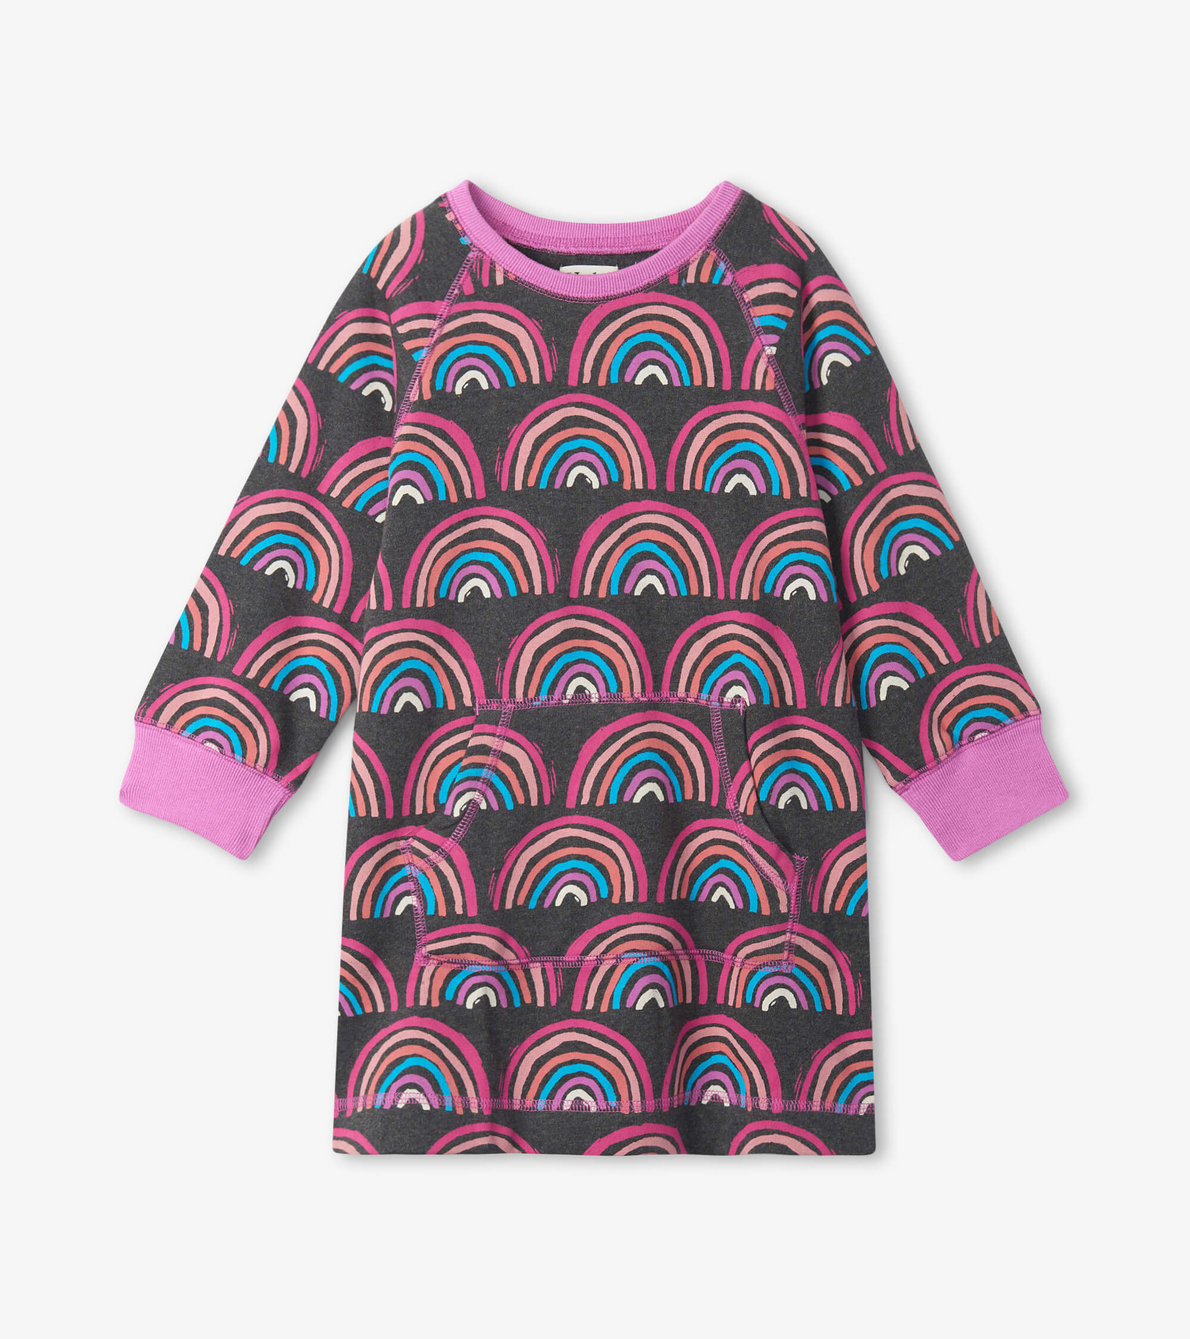 View larger image of Prismatic Rainbows Sweatshirt Dress